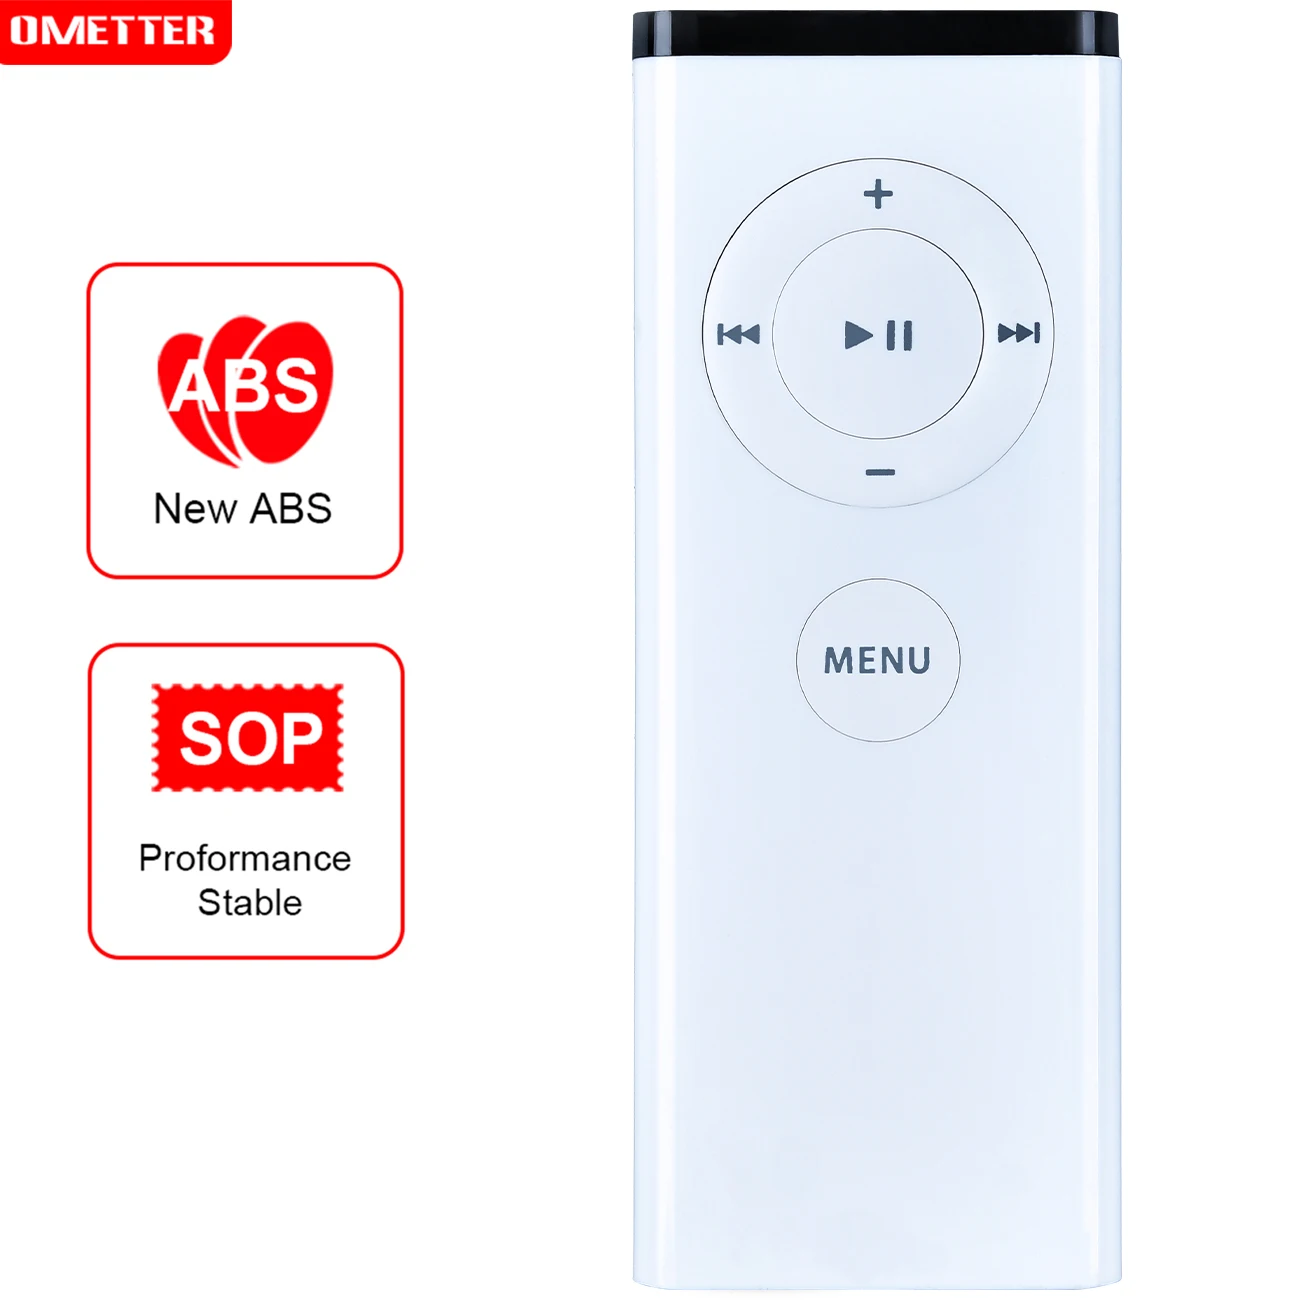 

Accoona New Original Remote Control for Macbook Pro Apple Smart TV2 TV3 iMac Macbook Air Apple TV Box A1156